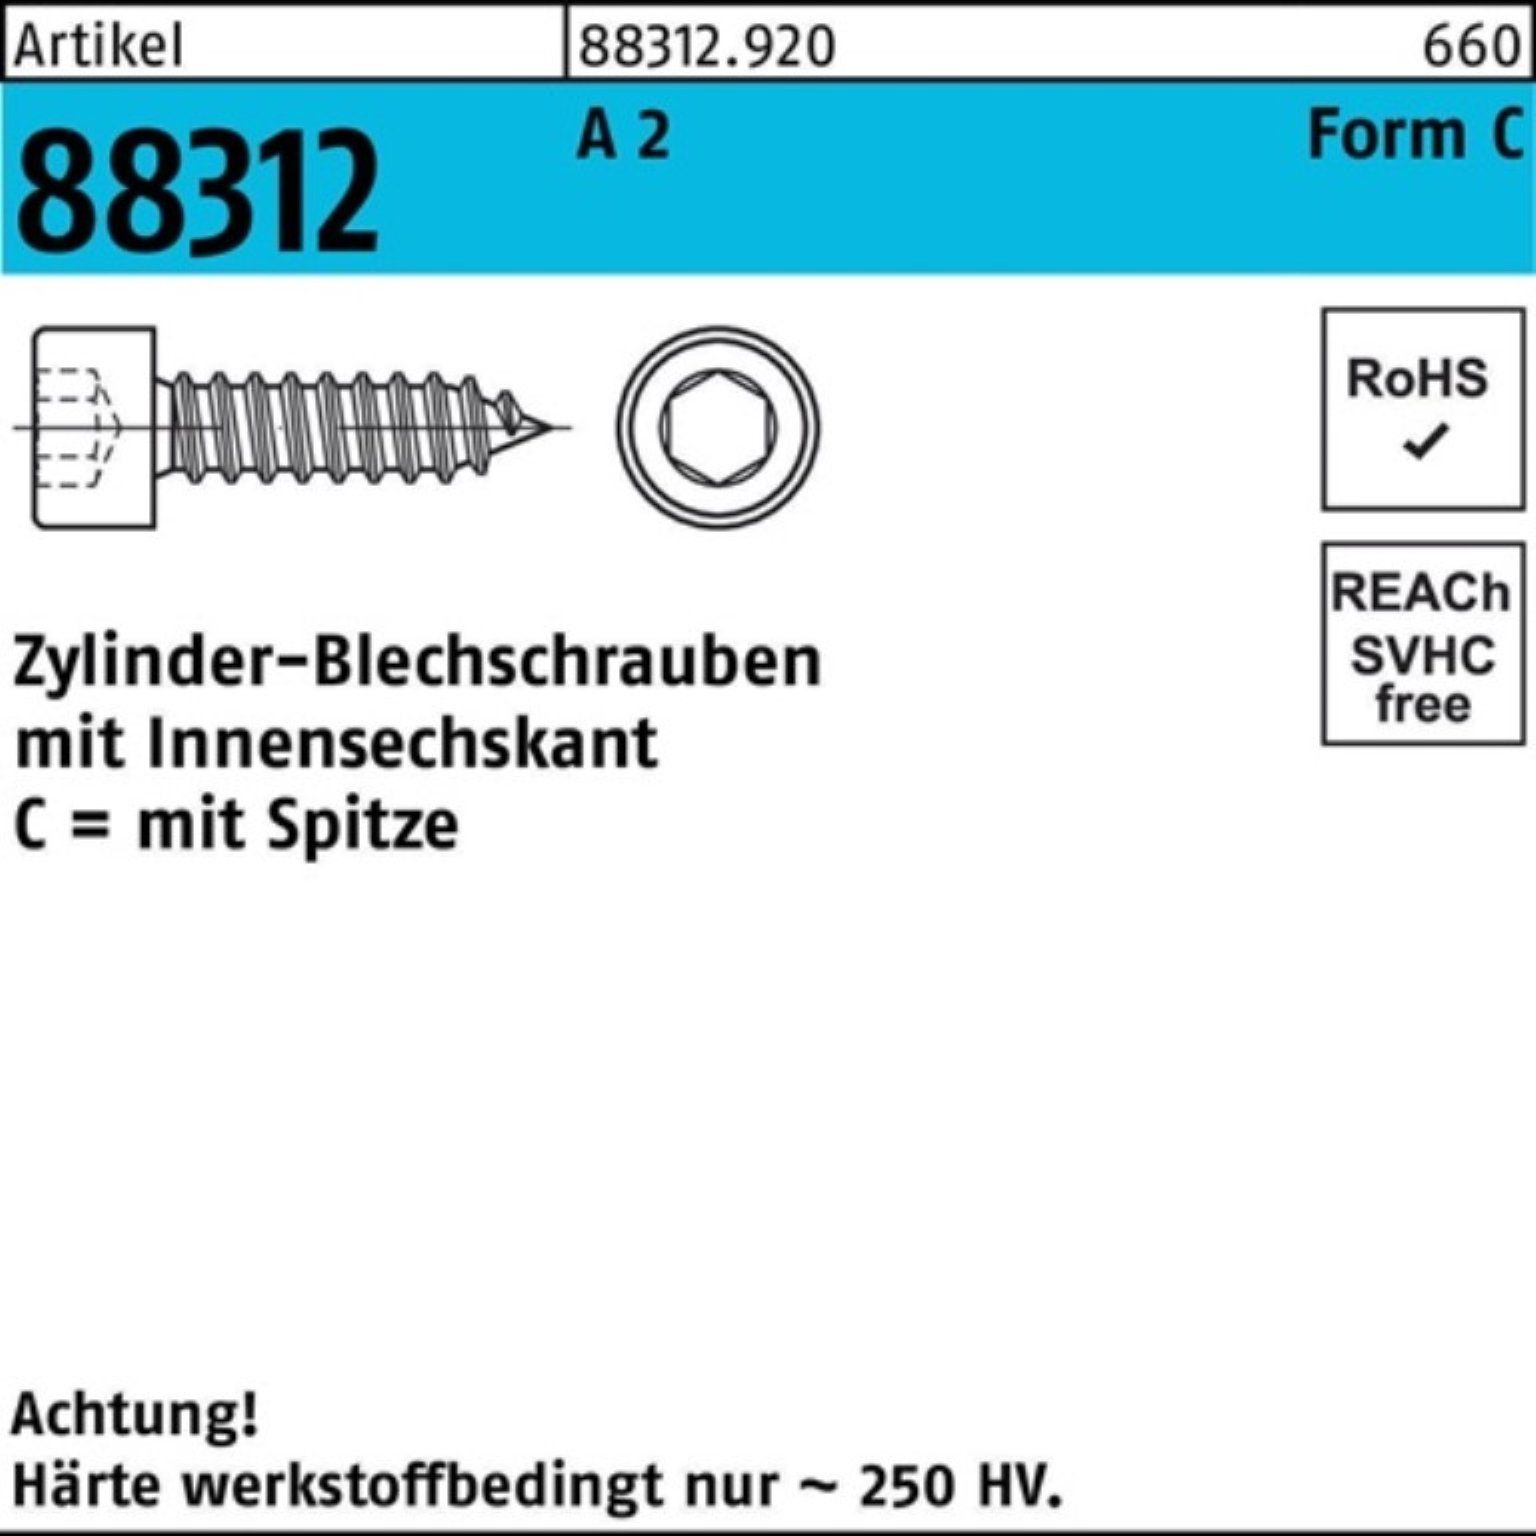 Reyher Blechschraube 200er Pack Zylinderblechschraube R 88312 Spitze/Innen-6kt C 6,3x 70 A